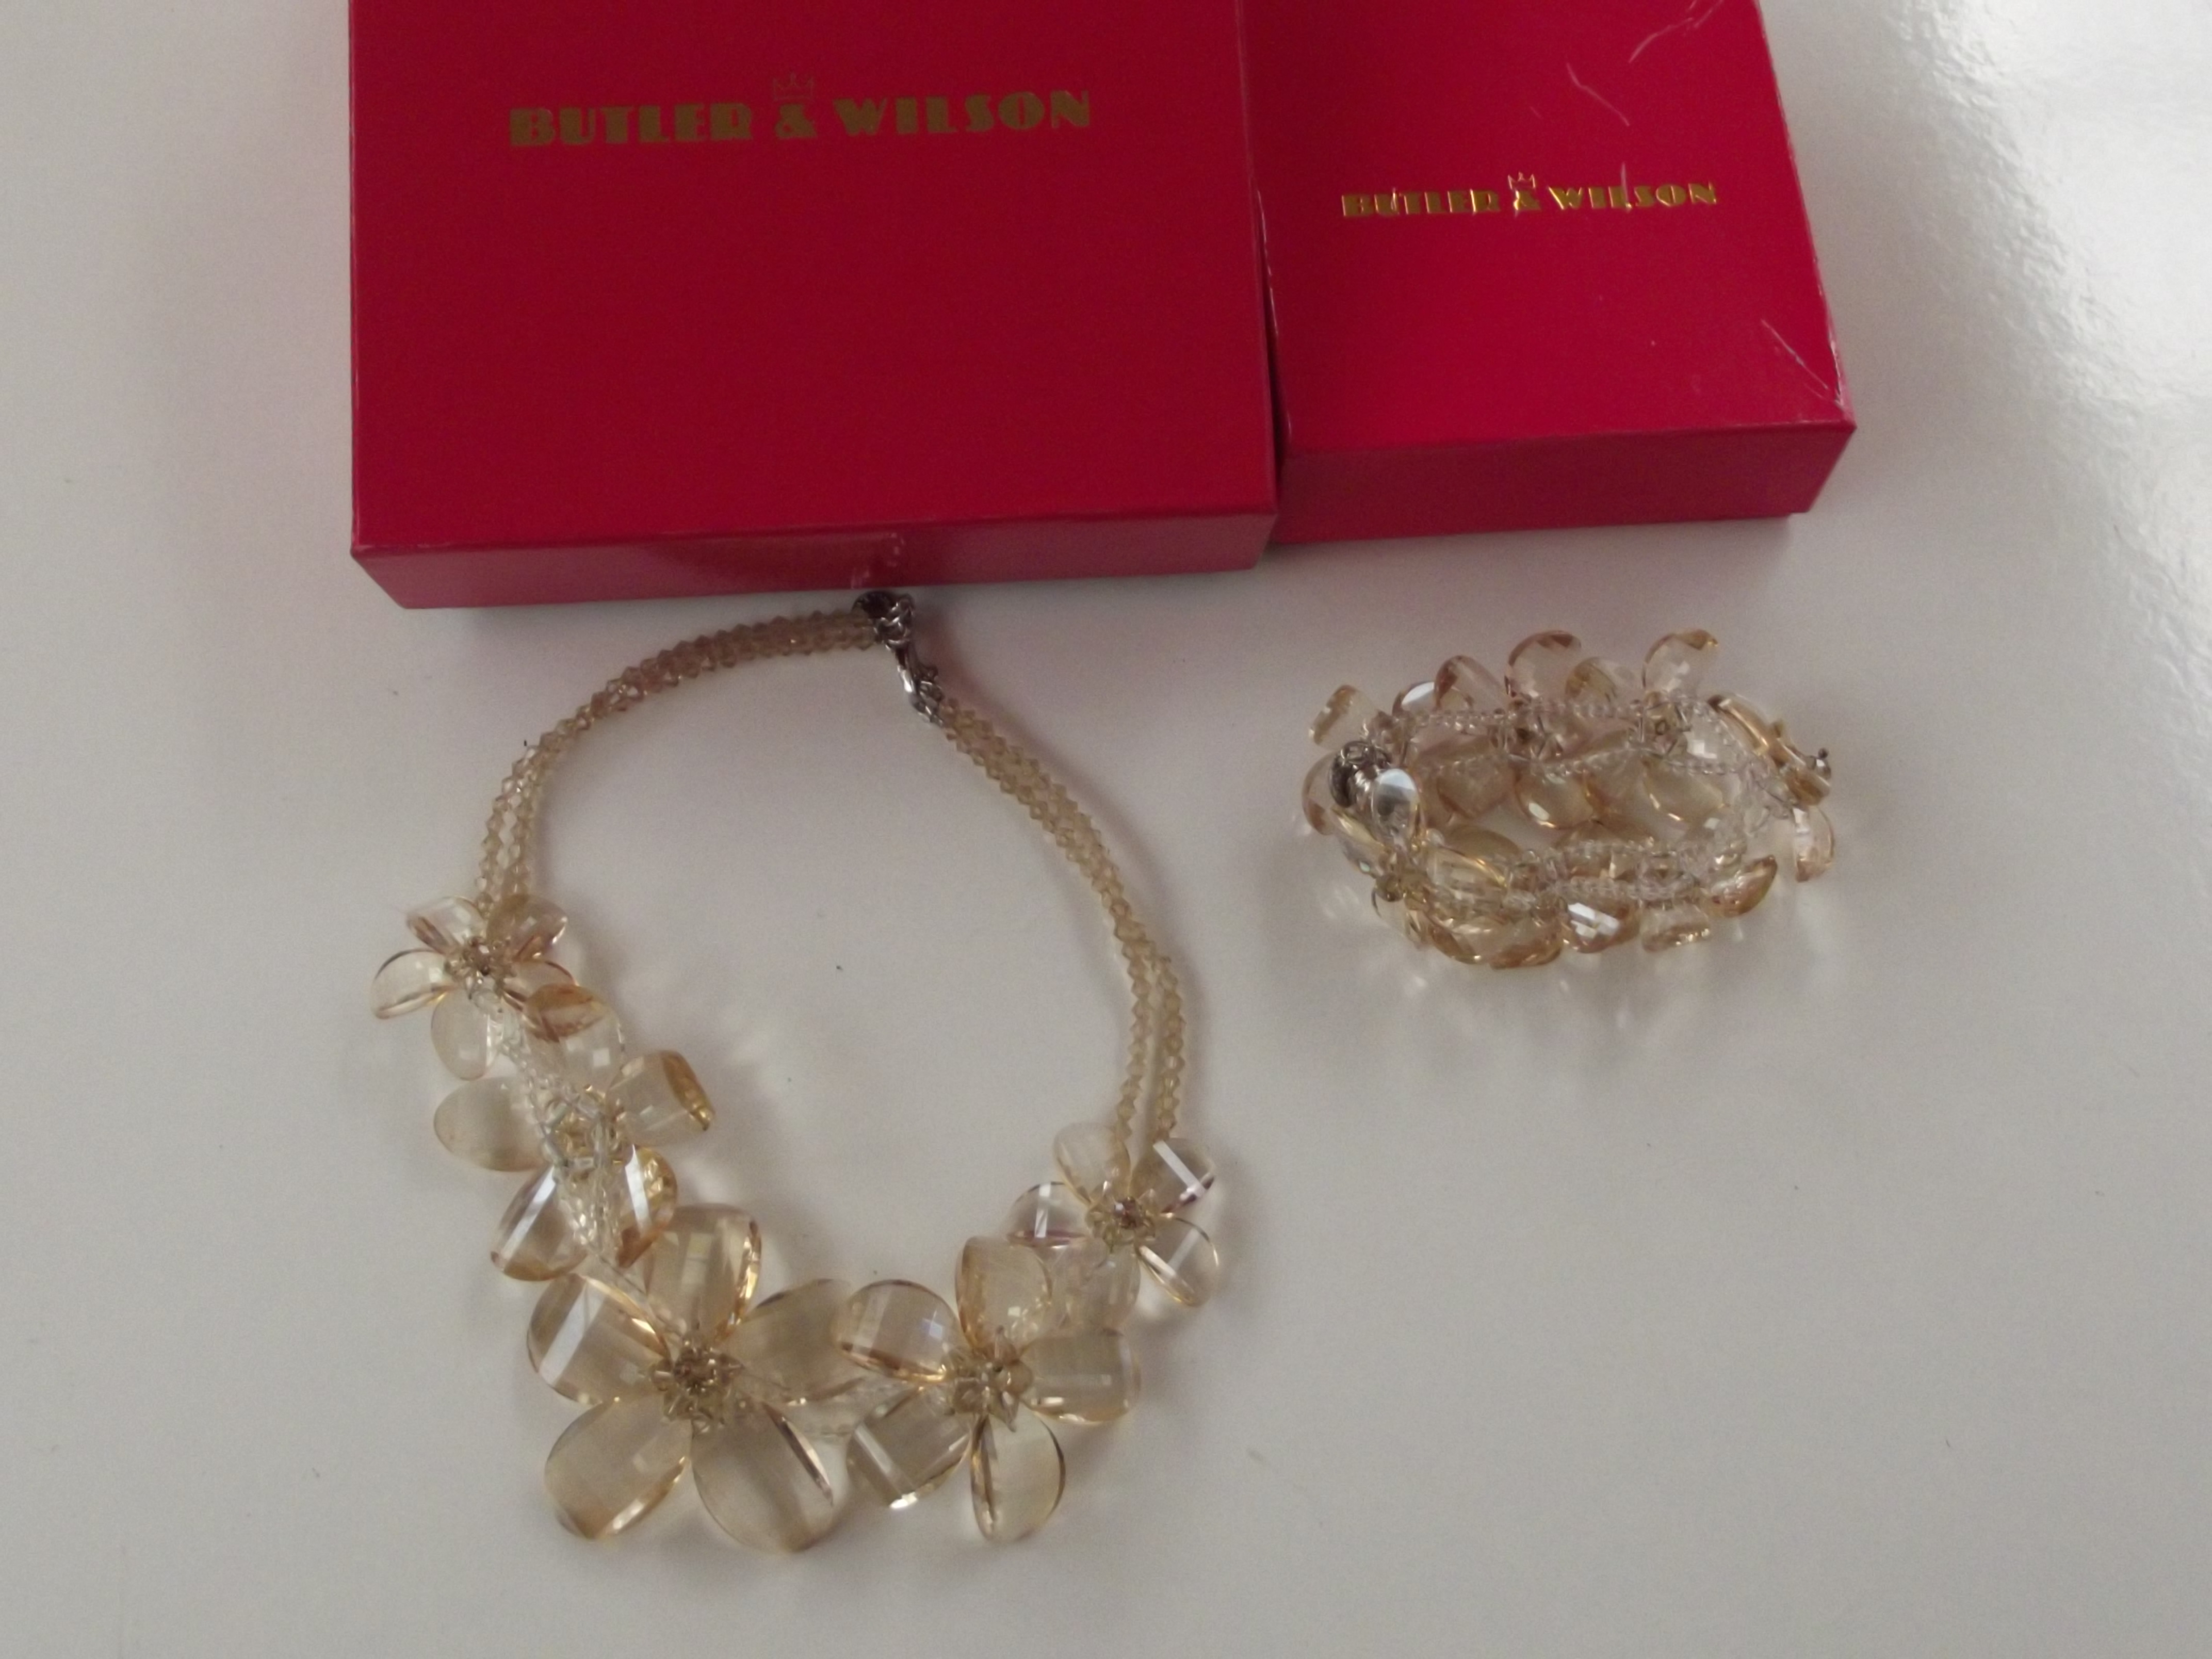 Butler & Wilson necklace and bracelet